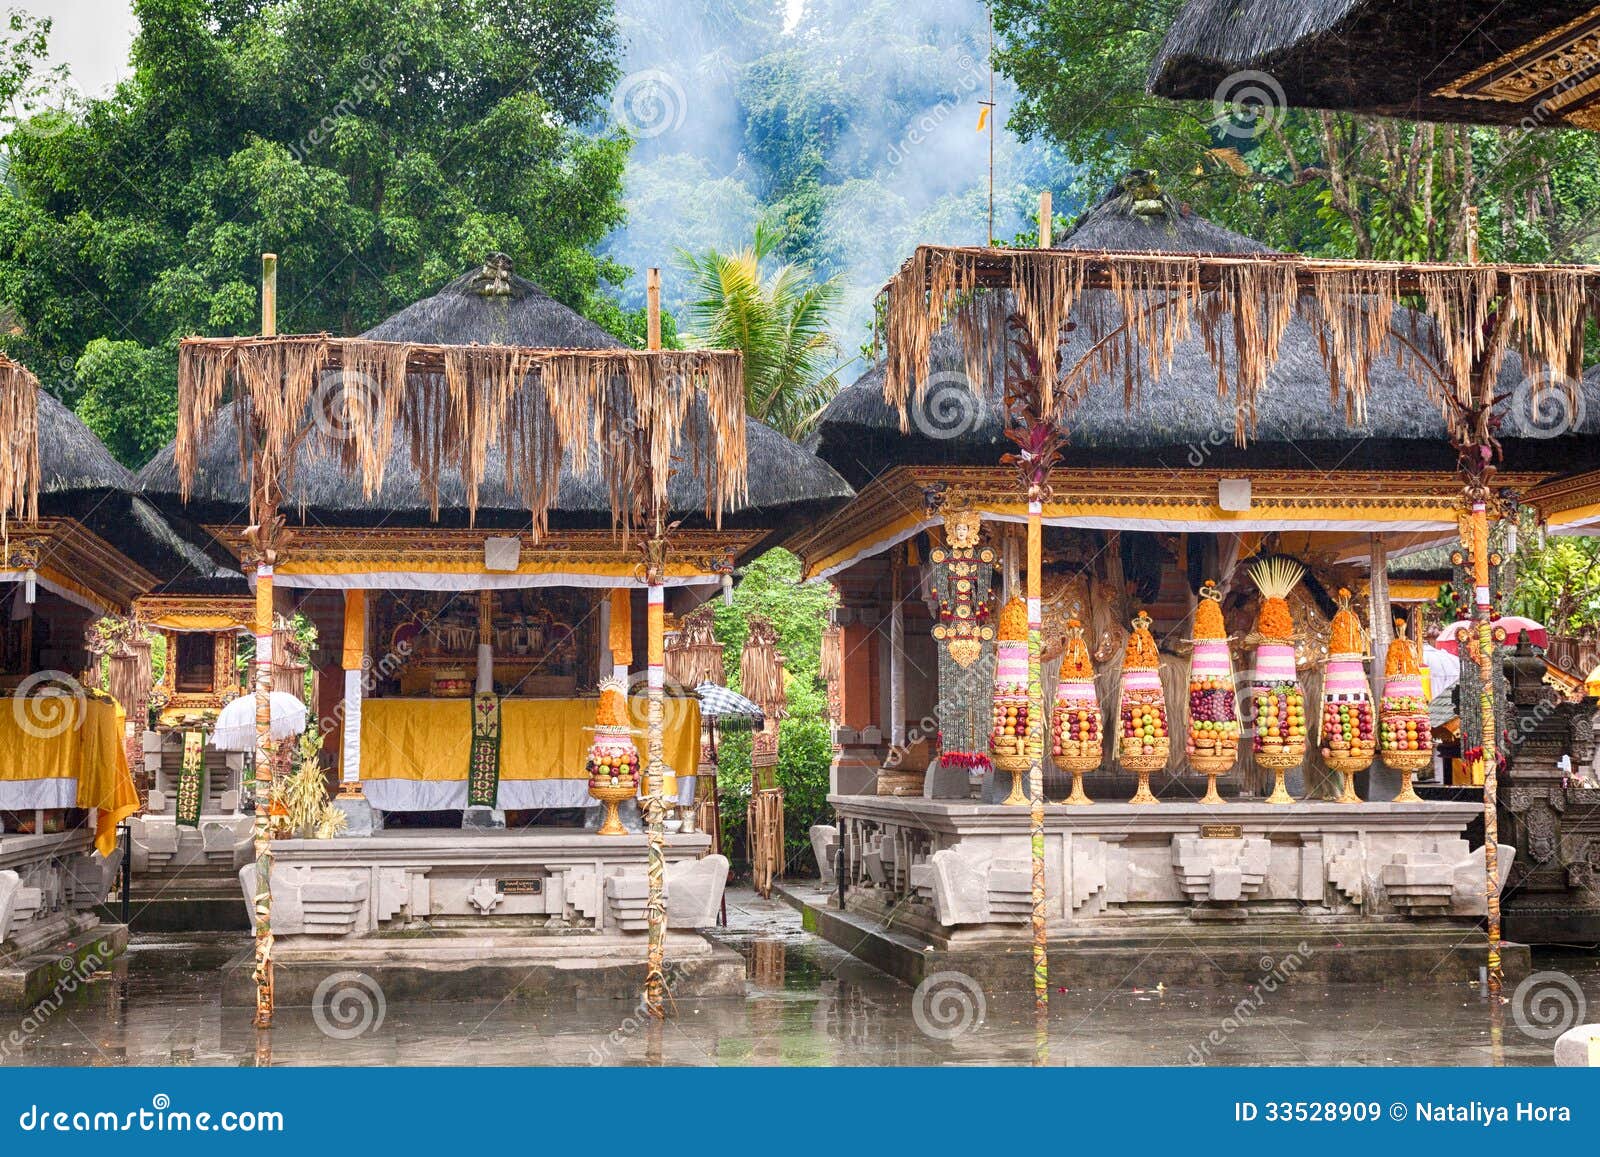 Hindu Food Offering in a Tampak Siring Temple, Bali Stock Image - Image